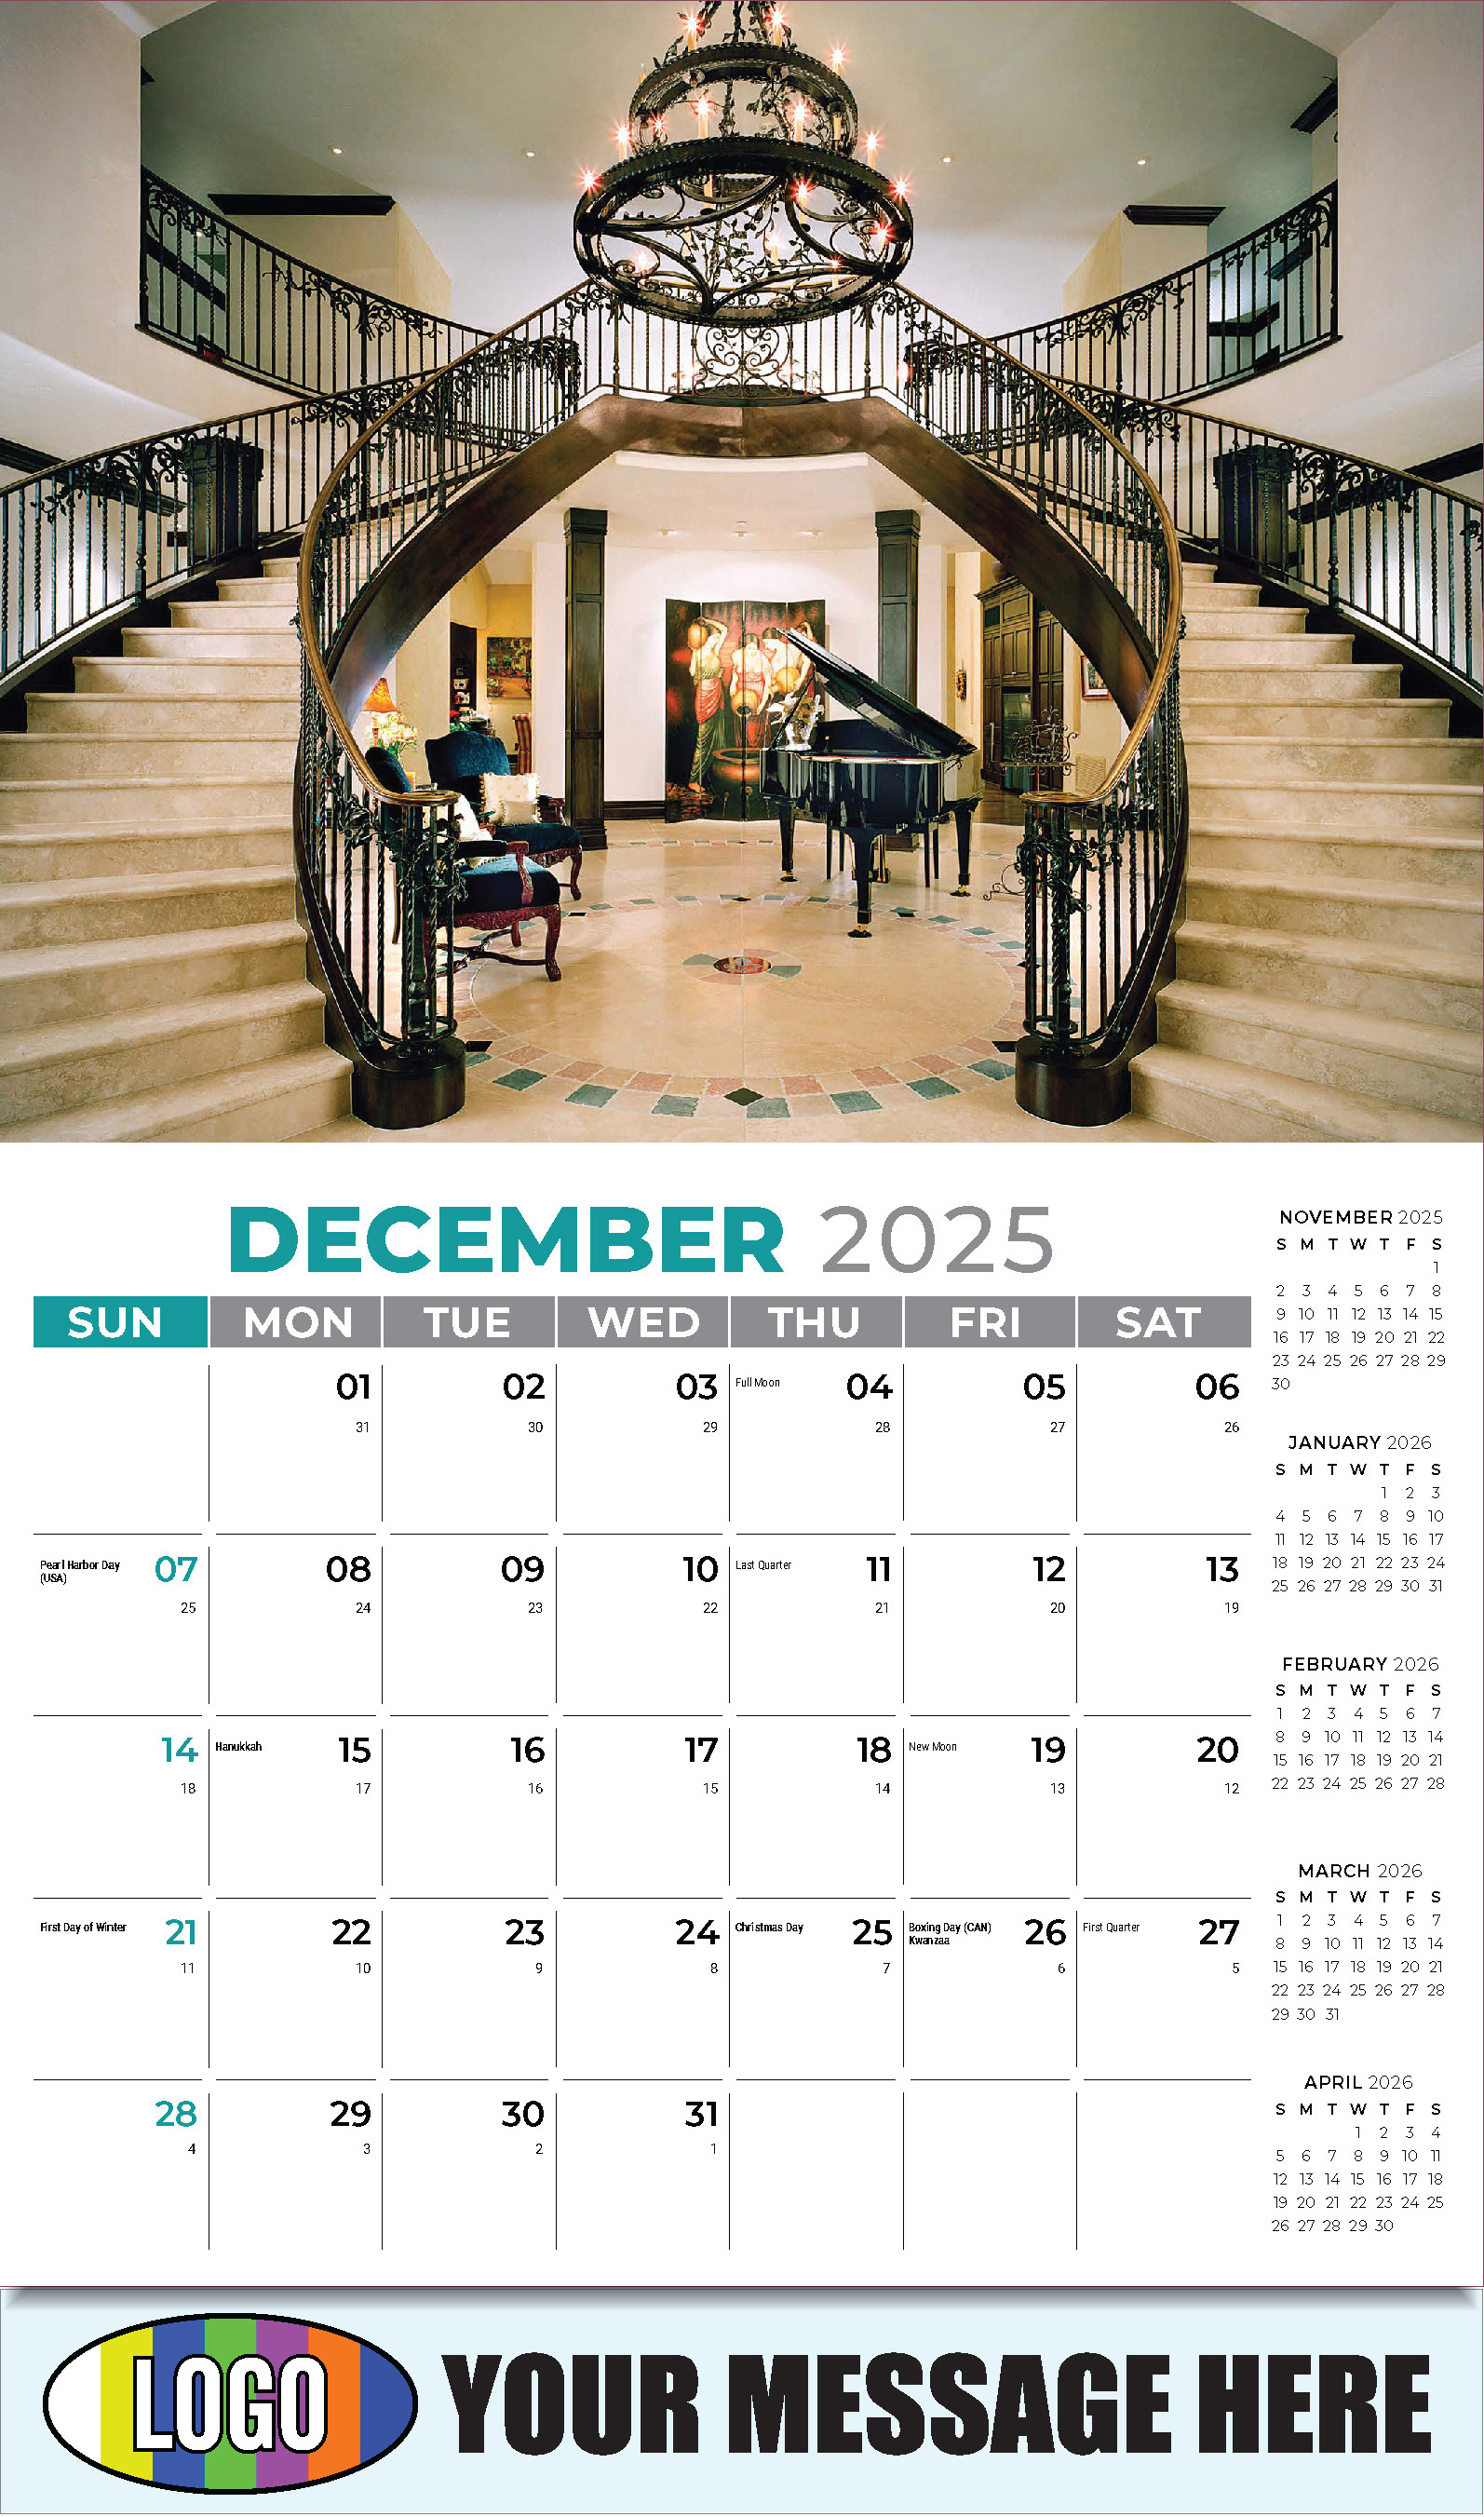 Decor and Design 2025 Interior Design Business Promotional Calendar - December